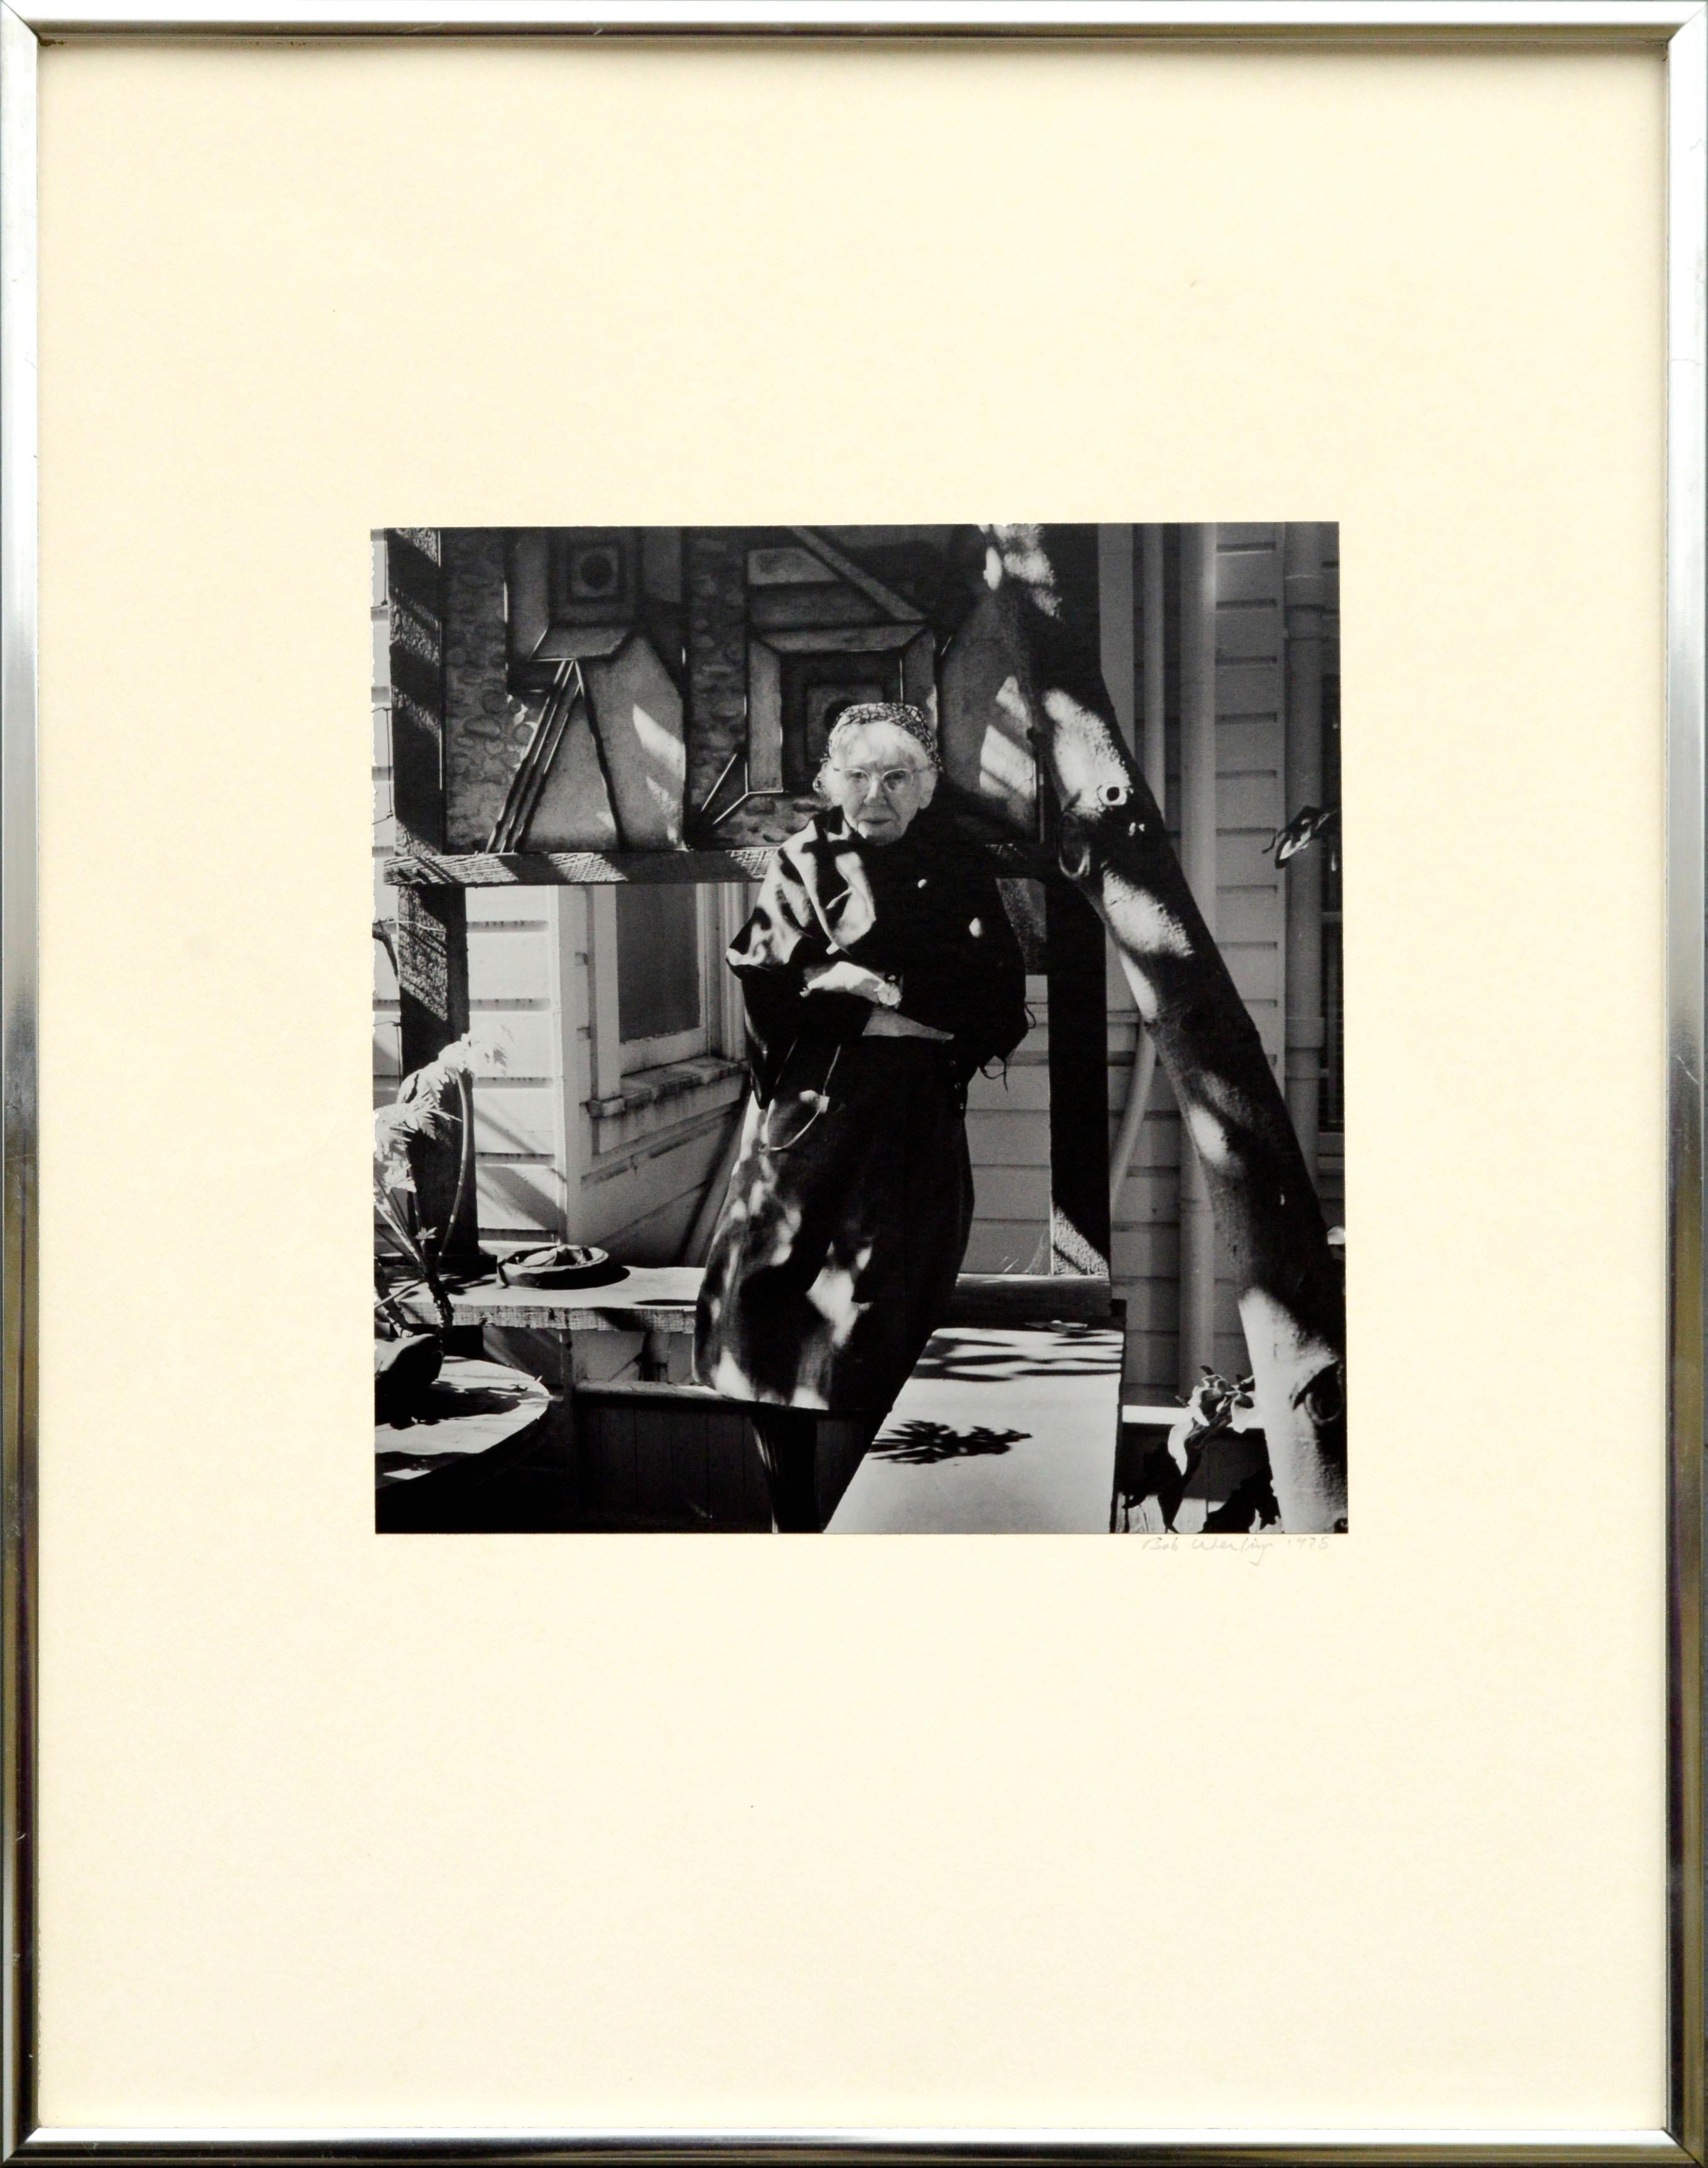 Robert Werling Figurative Photograph - Portrait of Imogen Cunningham - Black & White Photograph